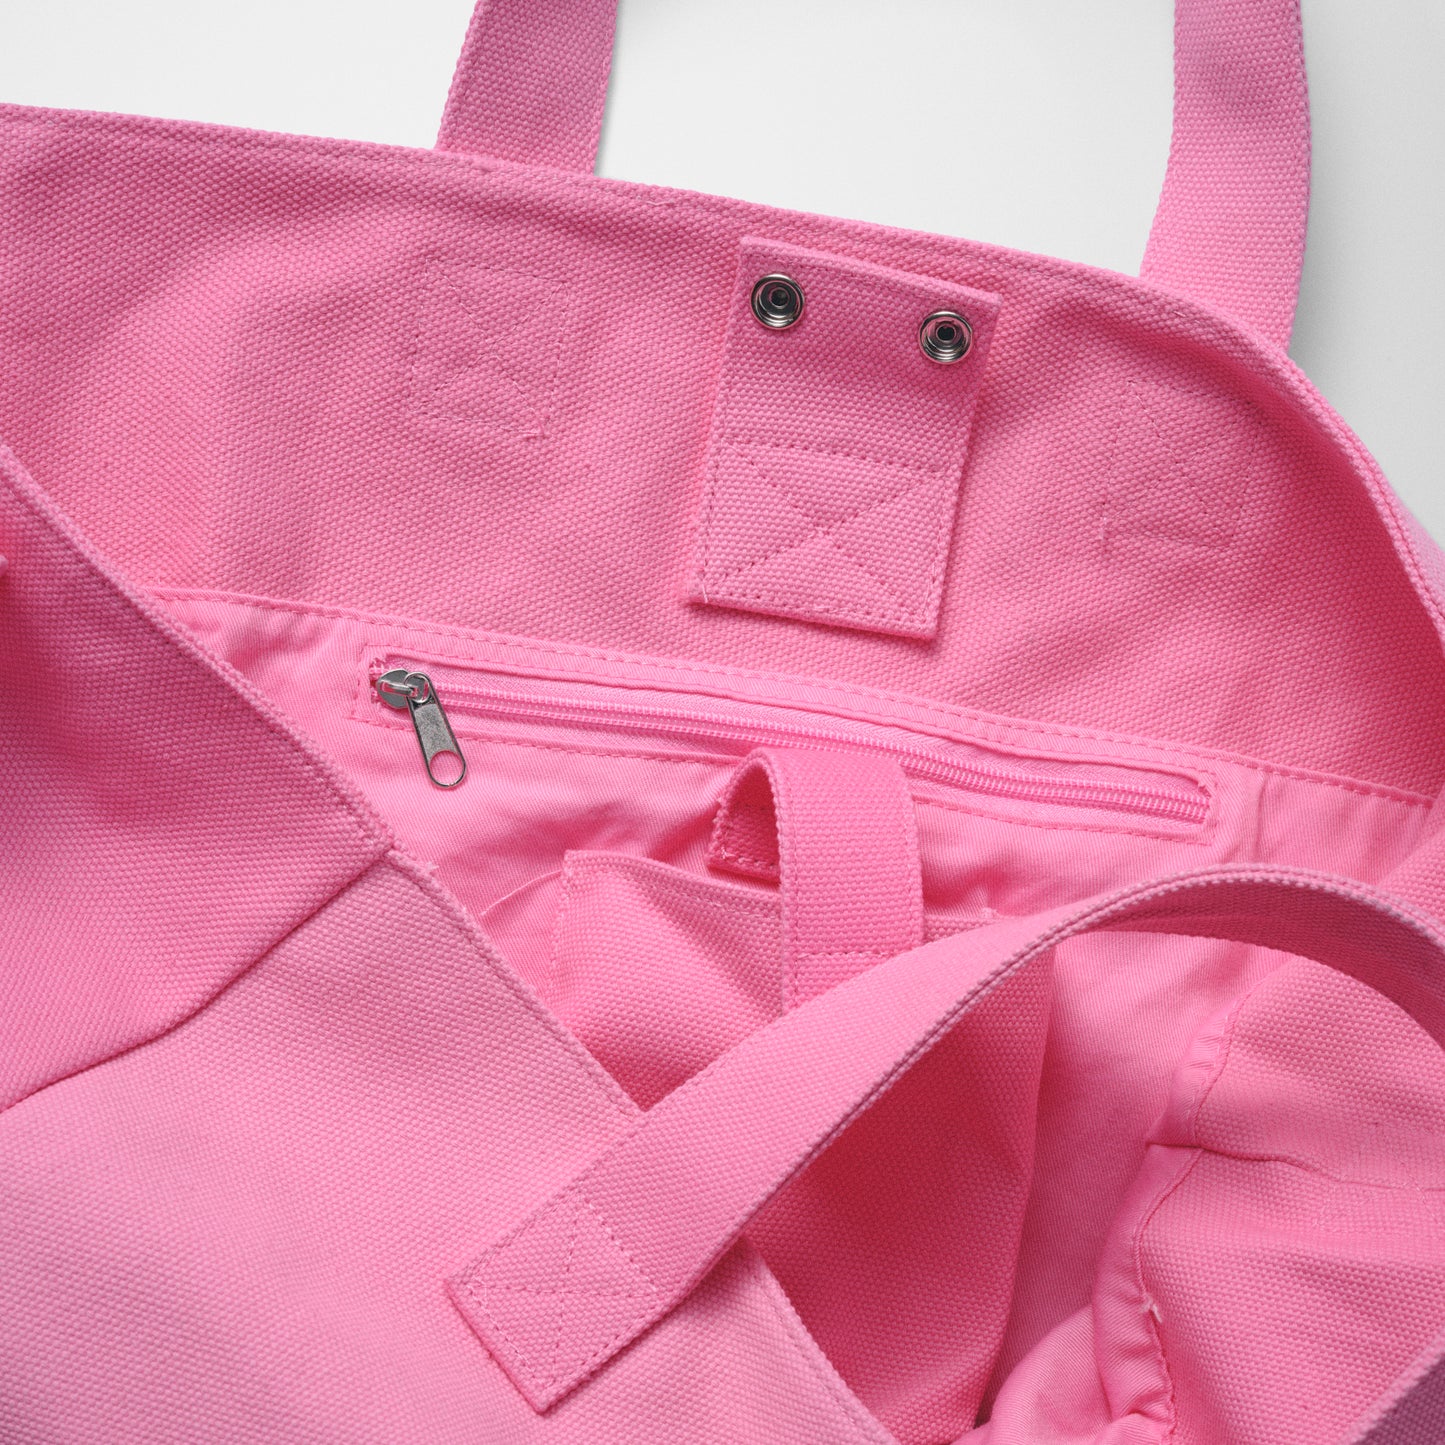 Beach bag pink